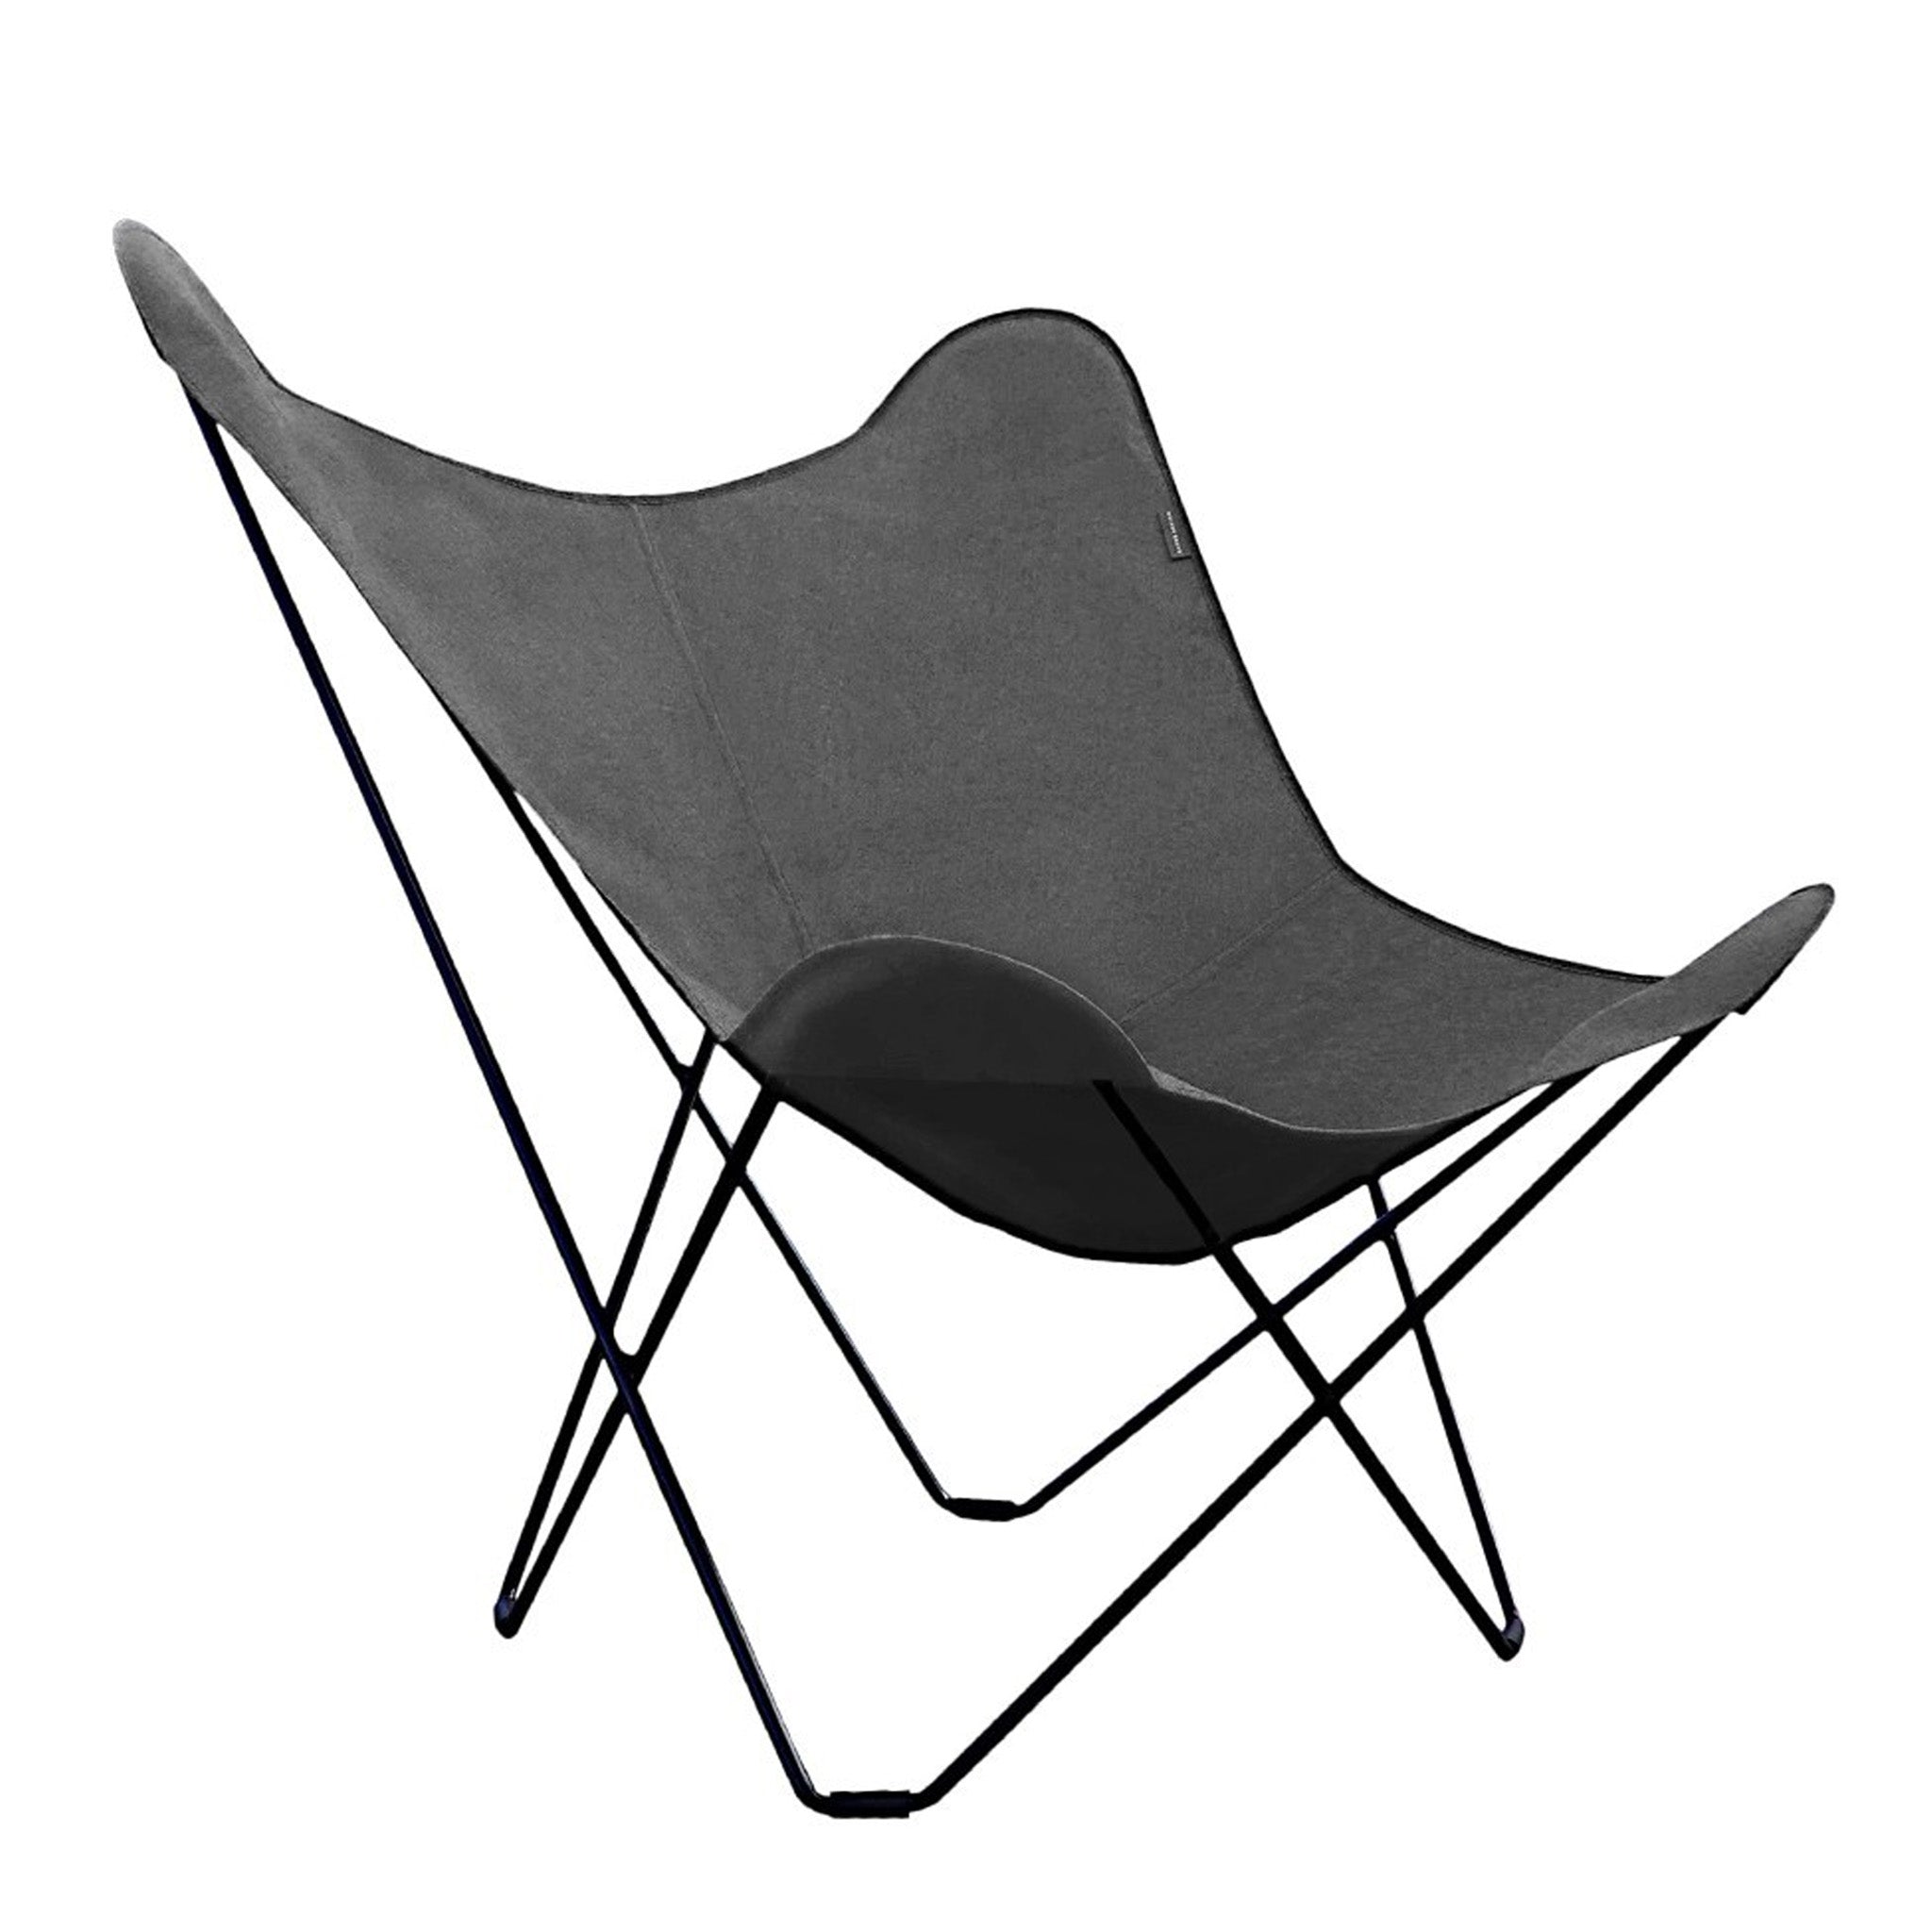 Clearance Outdoor Sunbrella Mariposa Chair / Graphite / Black by Cuero